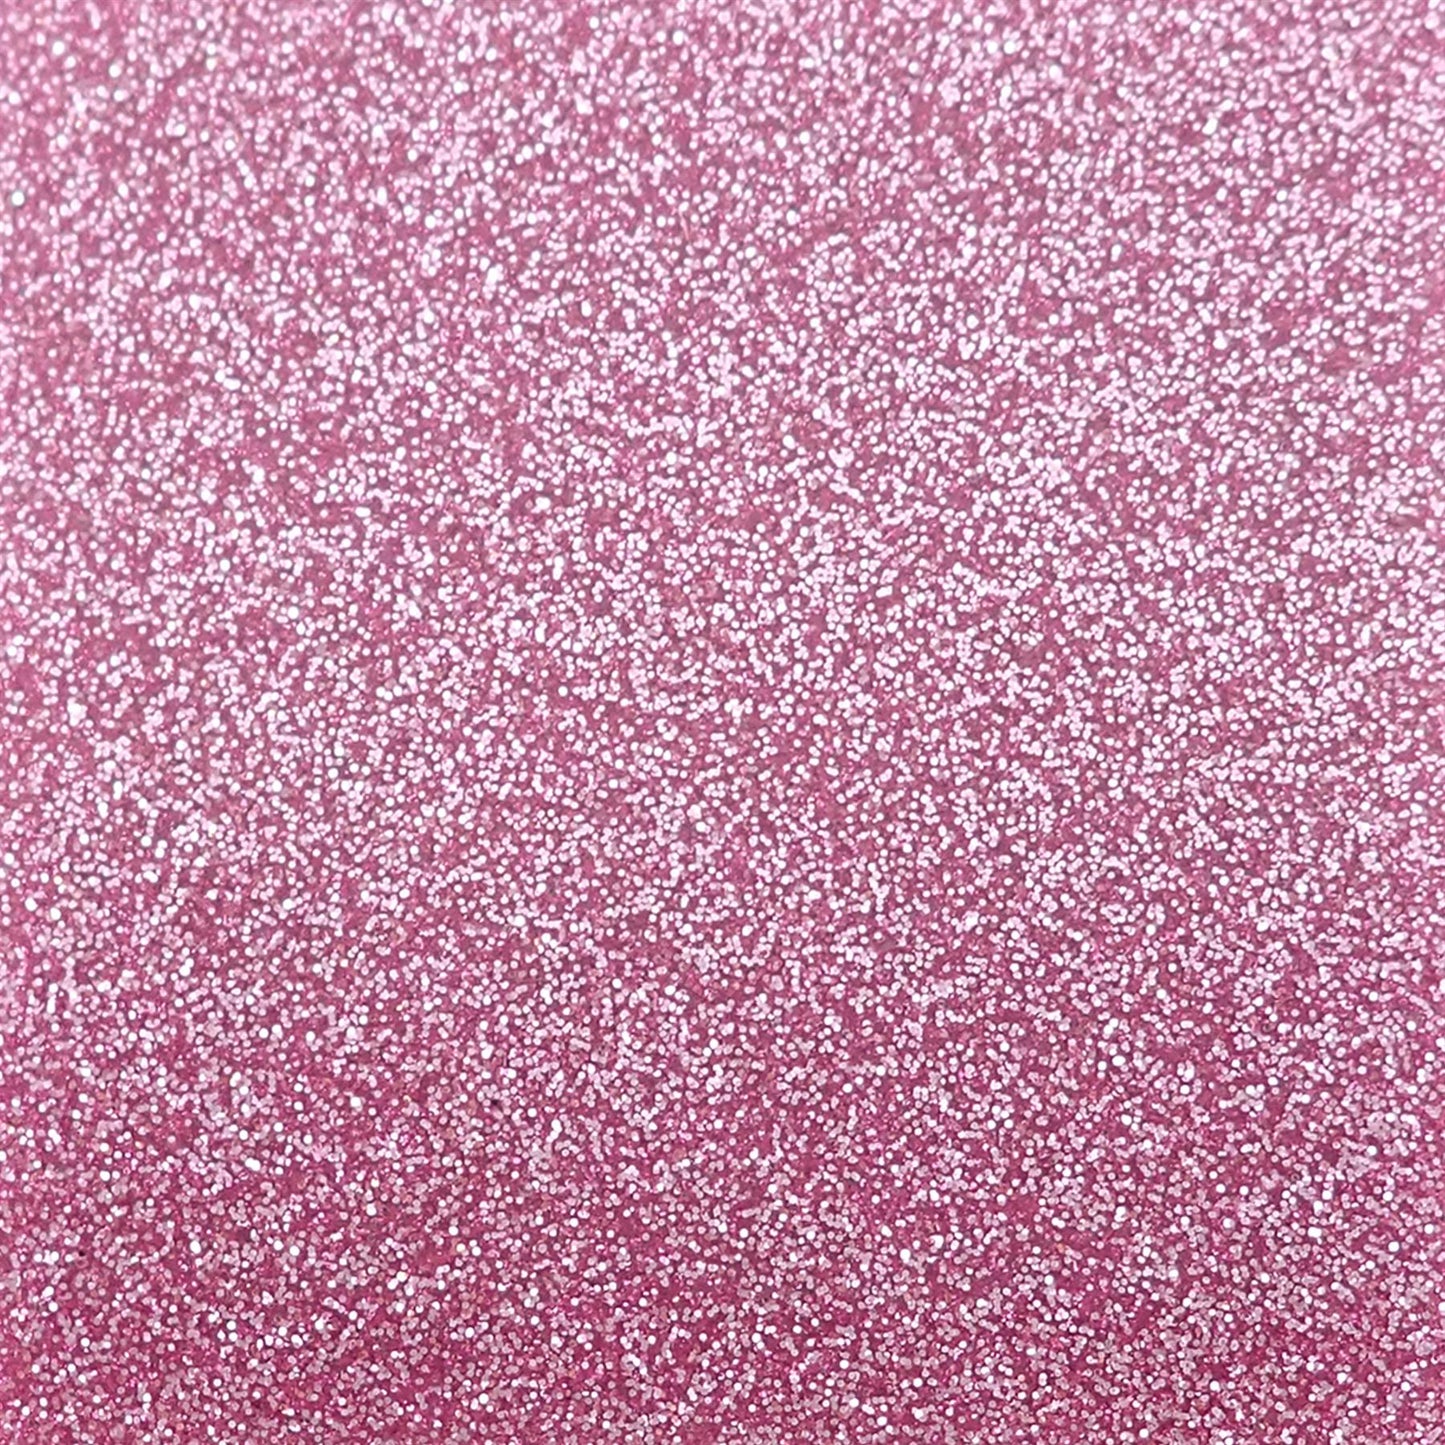 Incudo Pink 2-Sided Glitter Acrylic Sheet - 300x200x3mm (11.8x7.87x0.12")